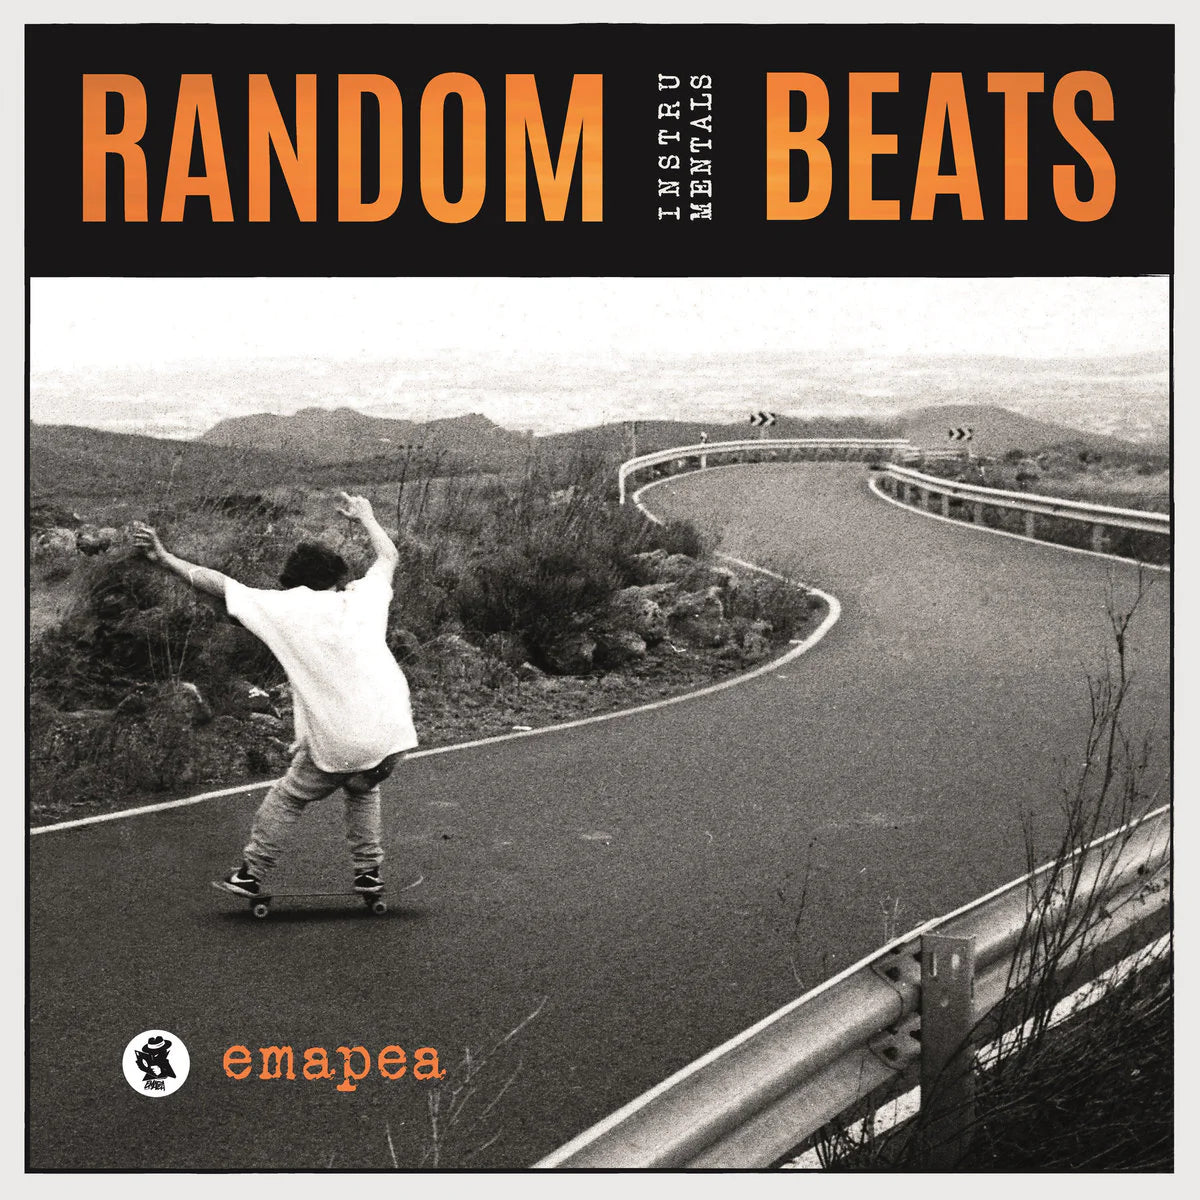 Random Beats